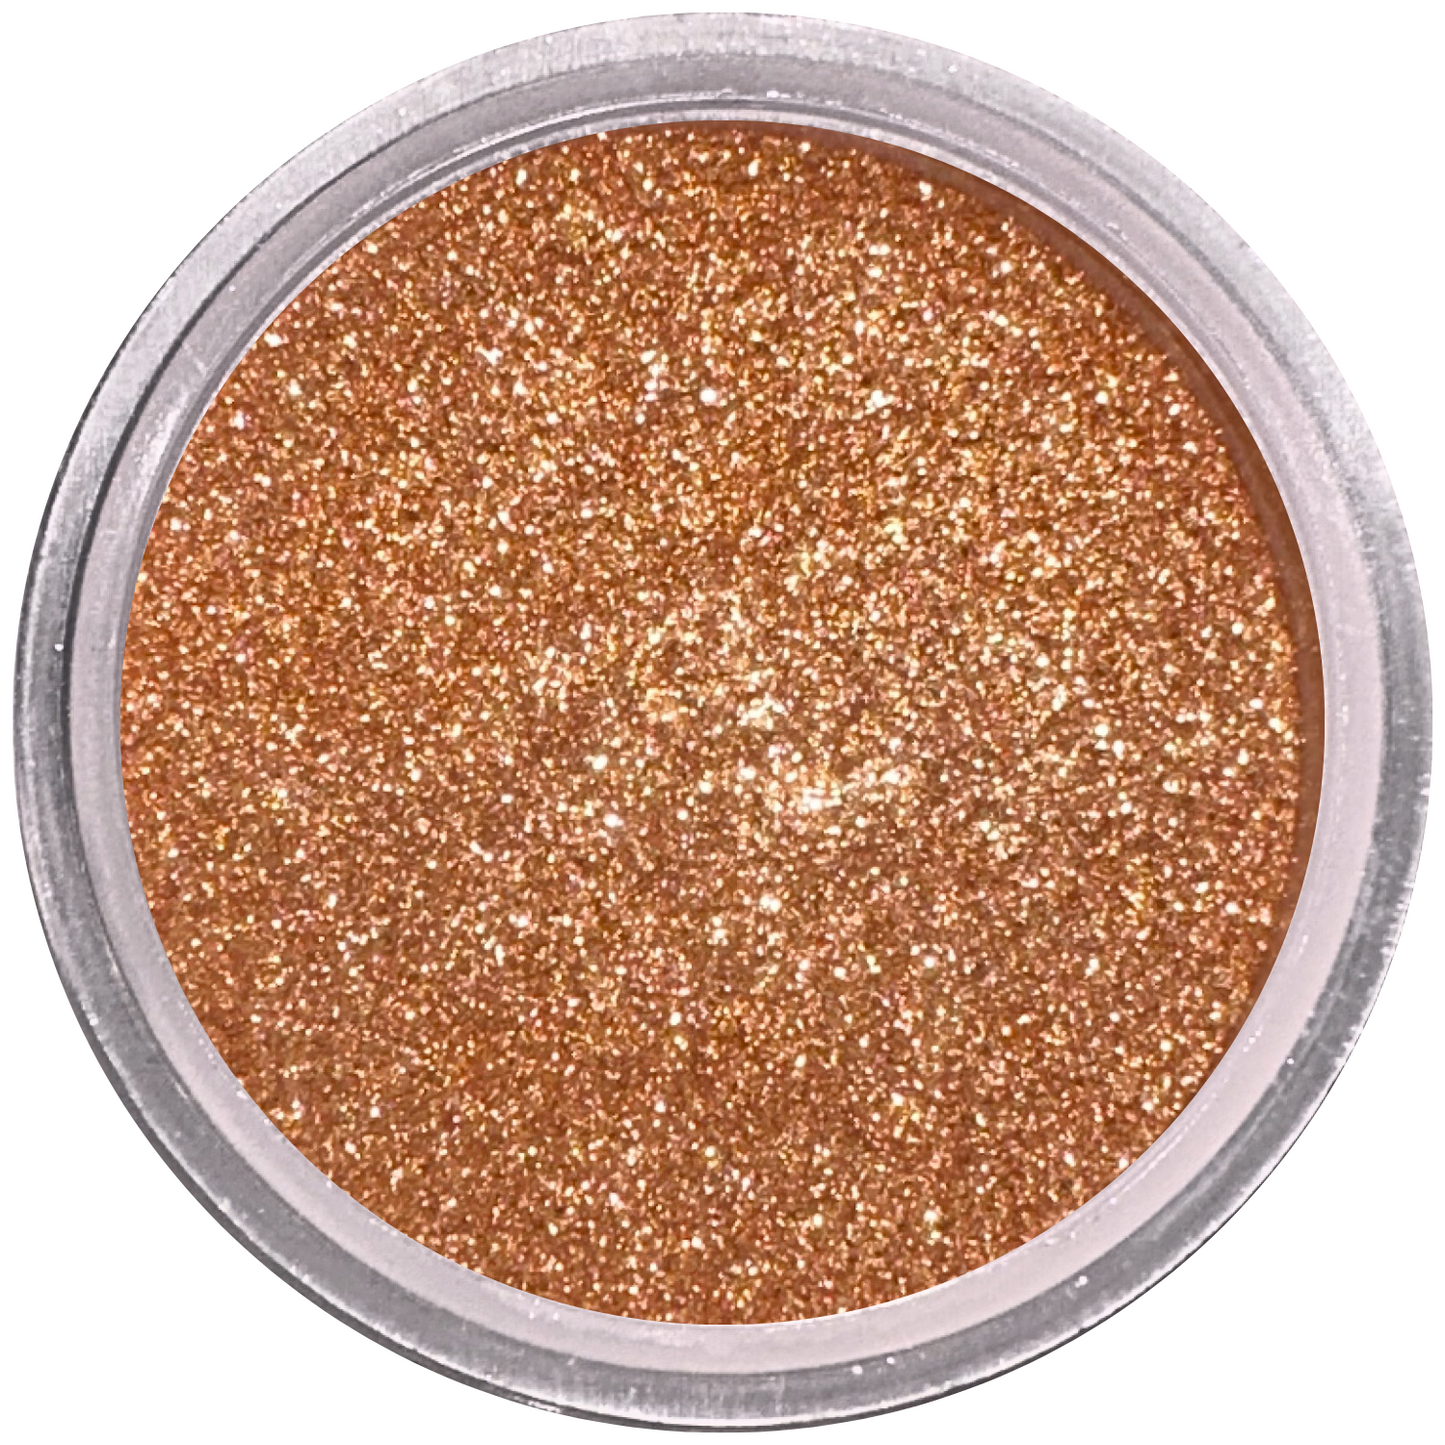 Golden Tan Loose Powder Mineral Eyeshadow Single 3g